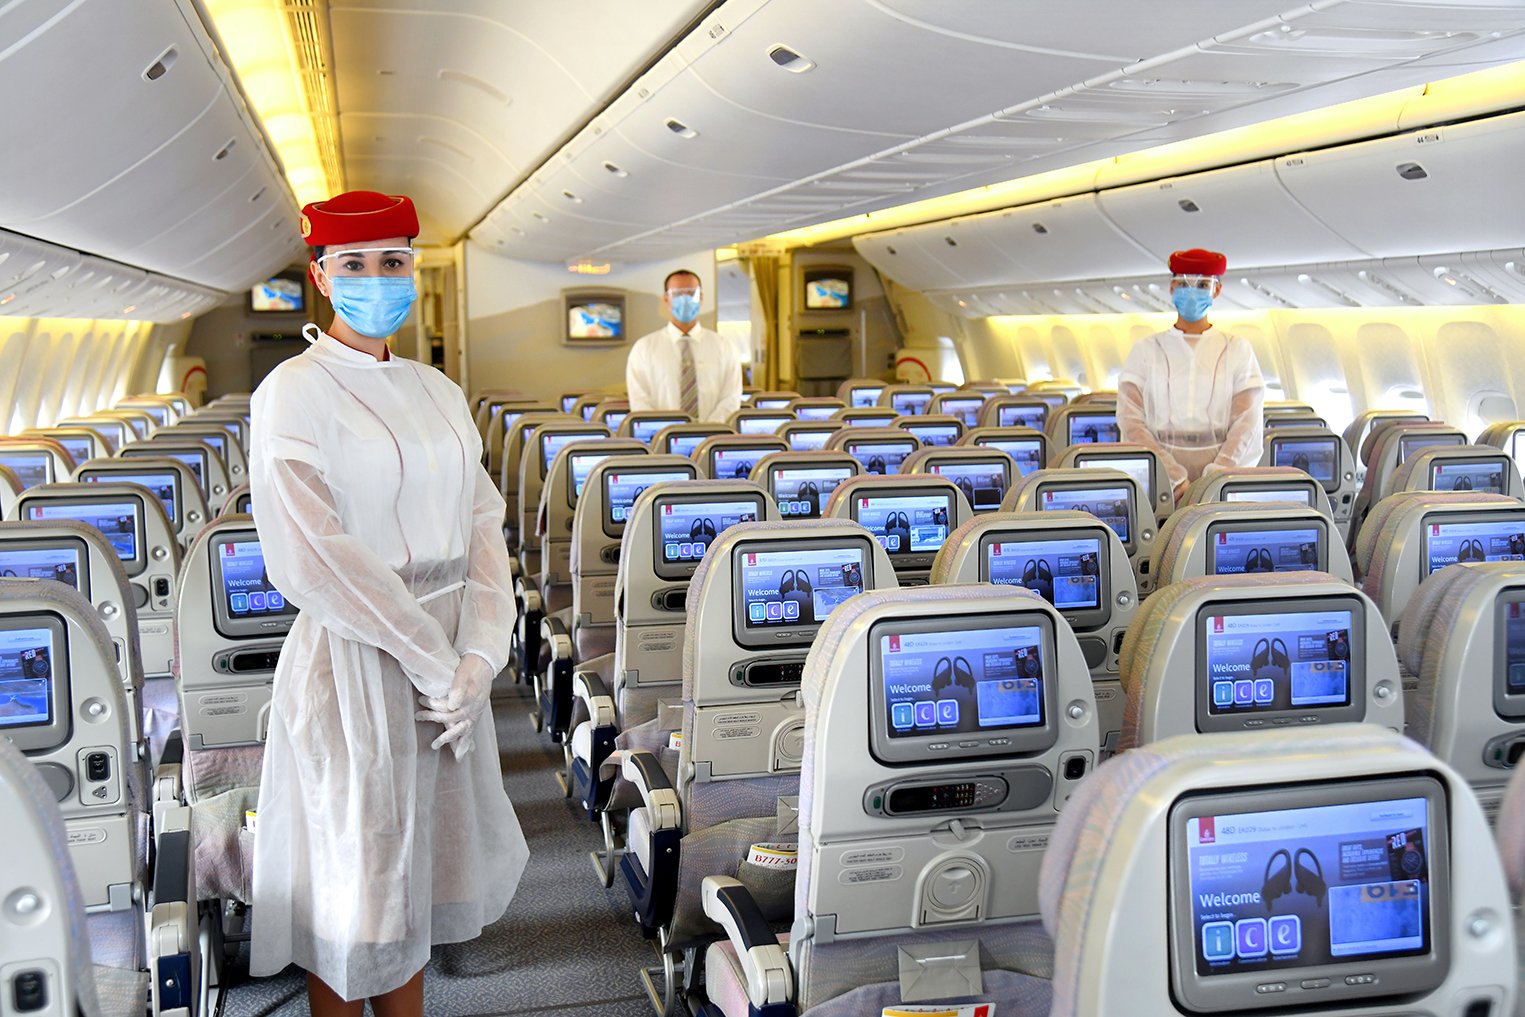 Emirates resumes passenger flights to 9 destinations - Business ...